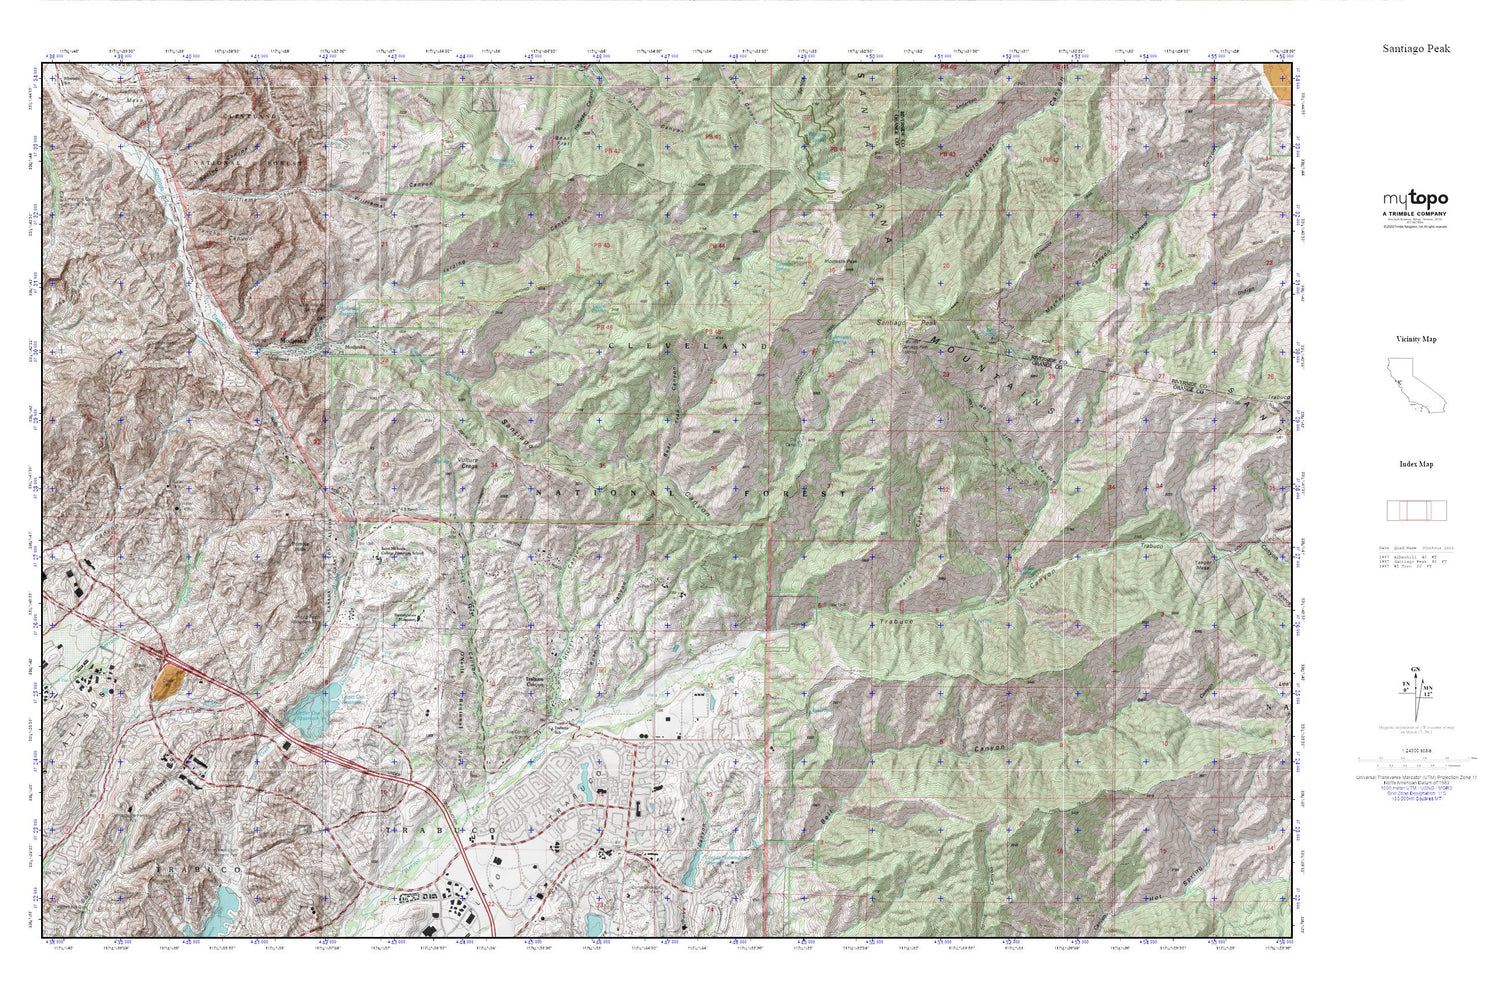 Santiago Peak MyTopo Explorer Series Map Image